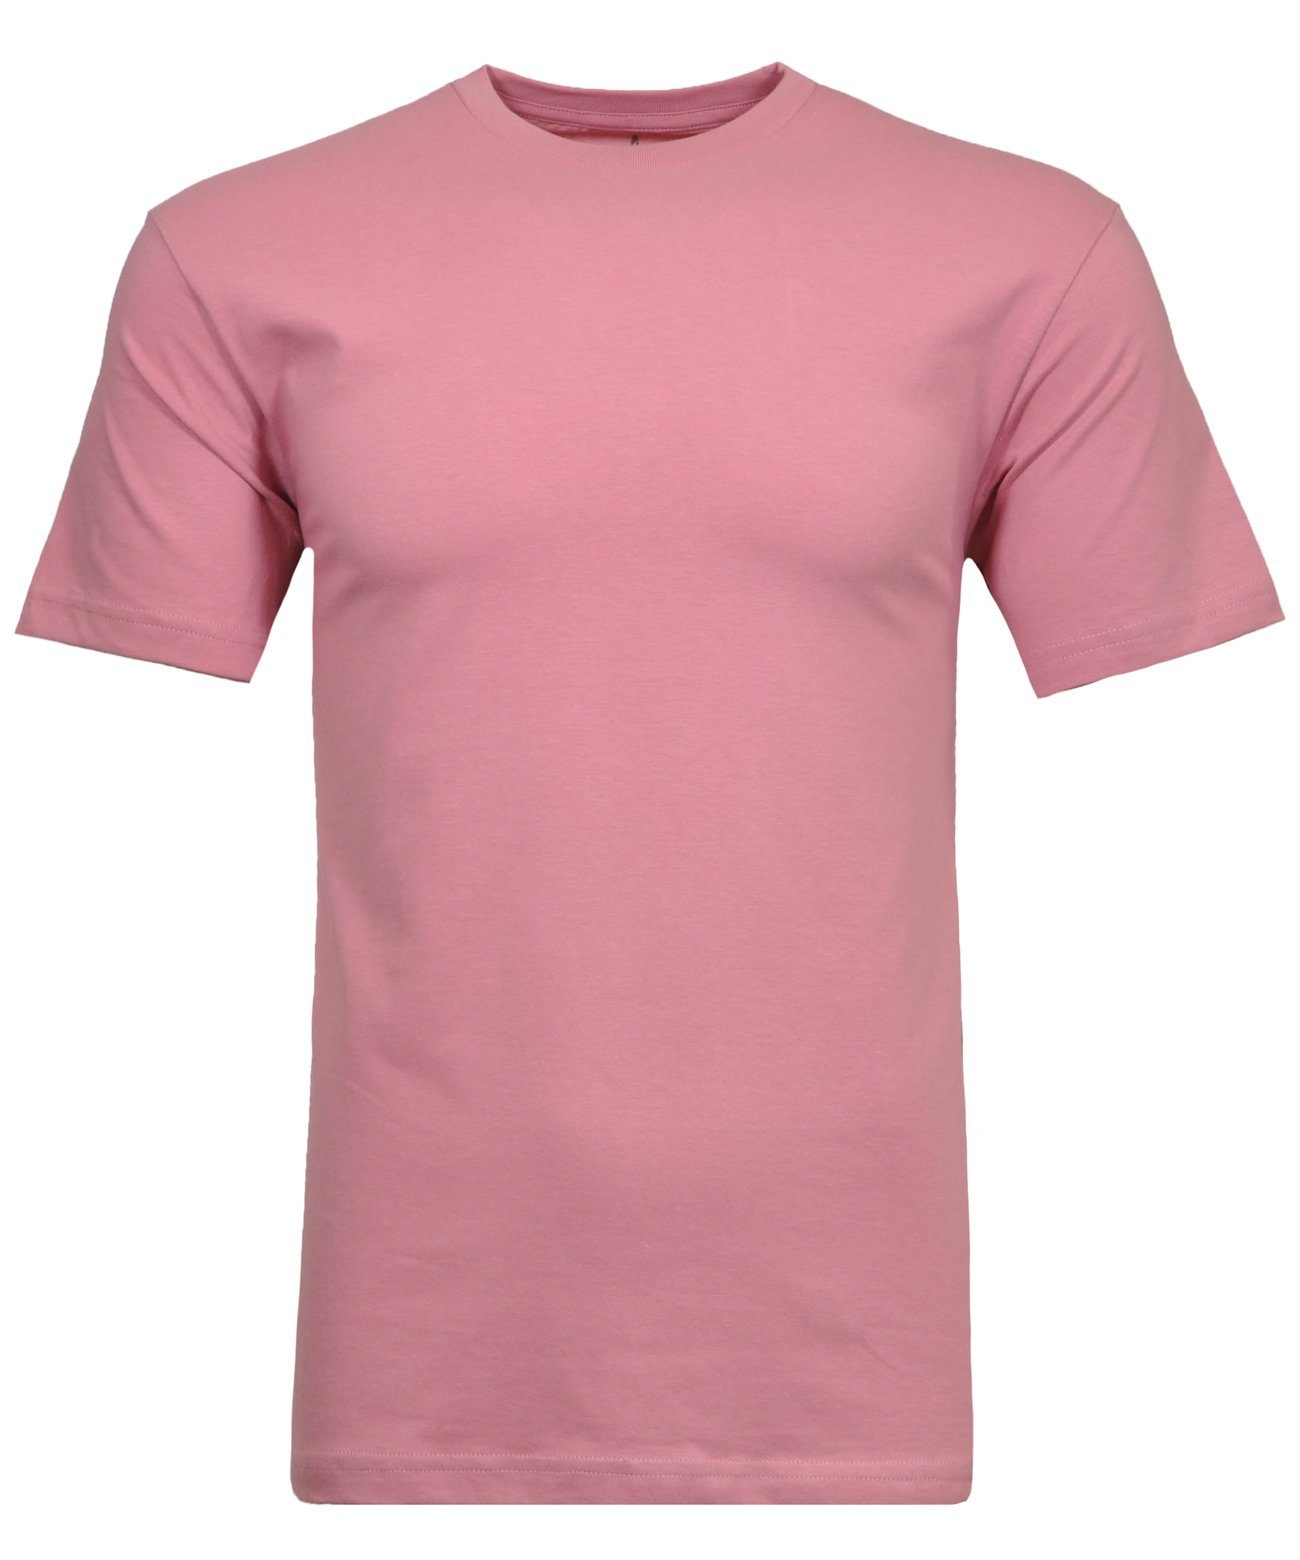 T-Shirt RAGMAN Pink-641